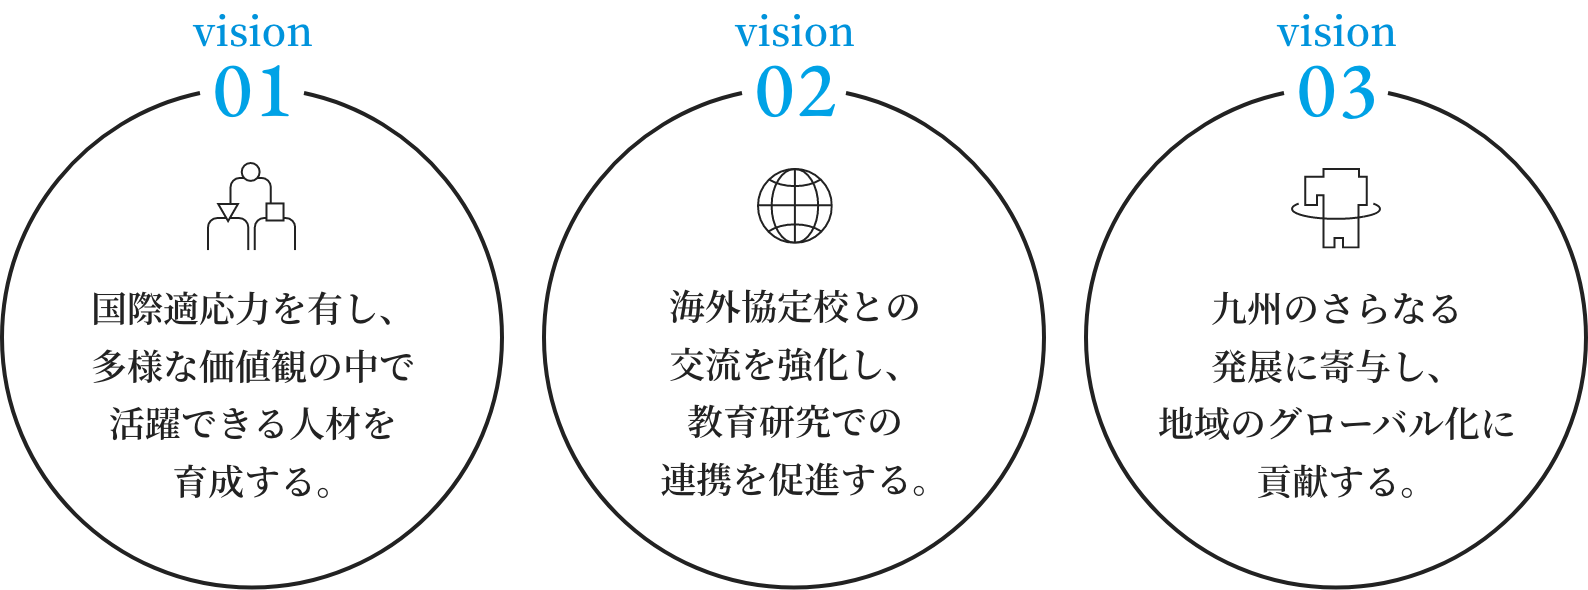 vision01.国際適応力を有し、多様な価値観の中で活躍できる人材を育成する。　vision02.海外協定校との交流を強化し、教育研究での連携を促進する。　vision03.九州のさらなる発展に寄与し、地域のグローバル化に貢献する。